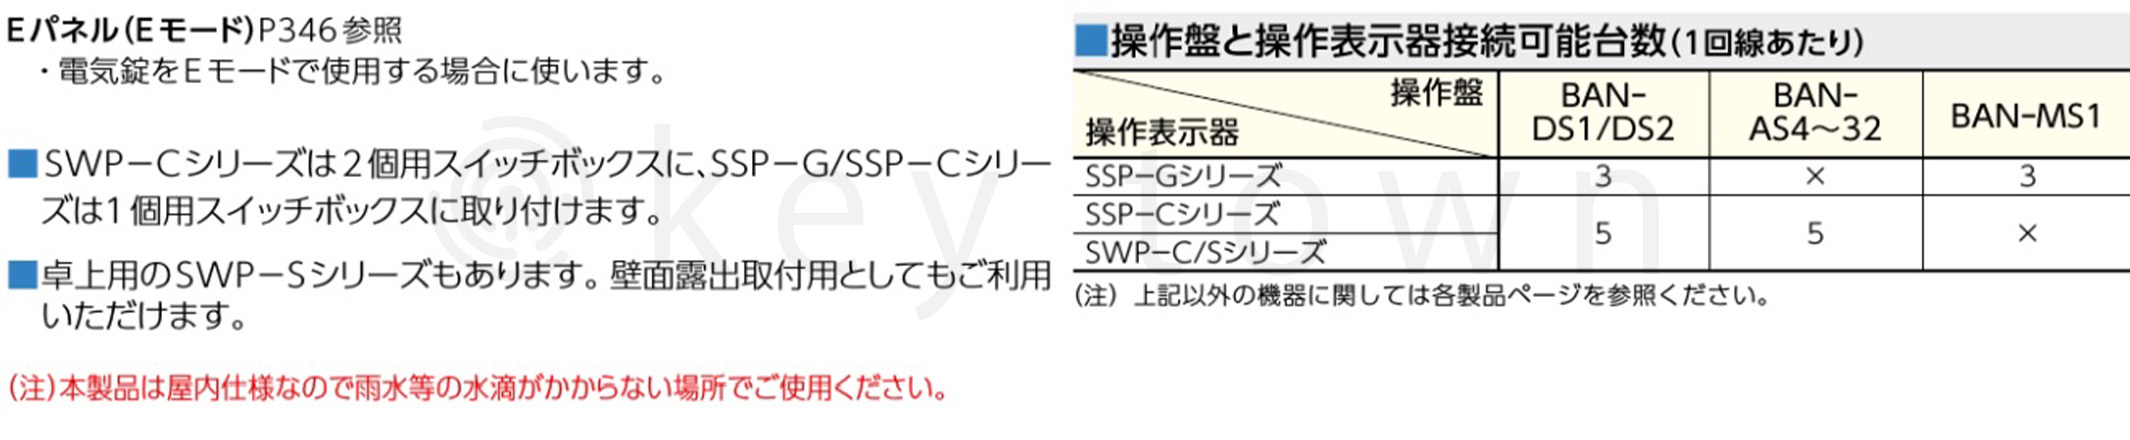 MIWA【美和ロック】 SSP-C1D 操作表示器 遠隔操作[MIWA SSP-C1D]｜鍵・シリンダーの格安ネット通販【鍵TOWN】